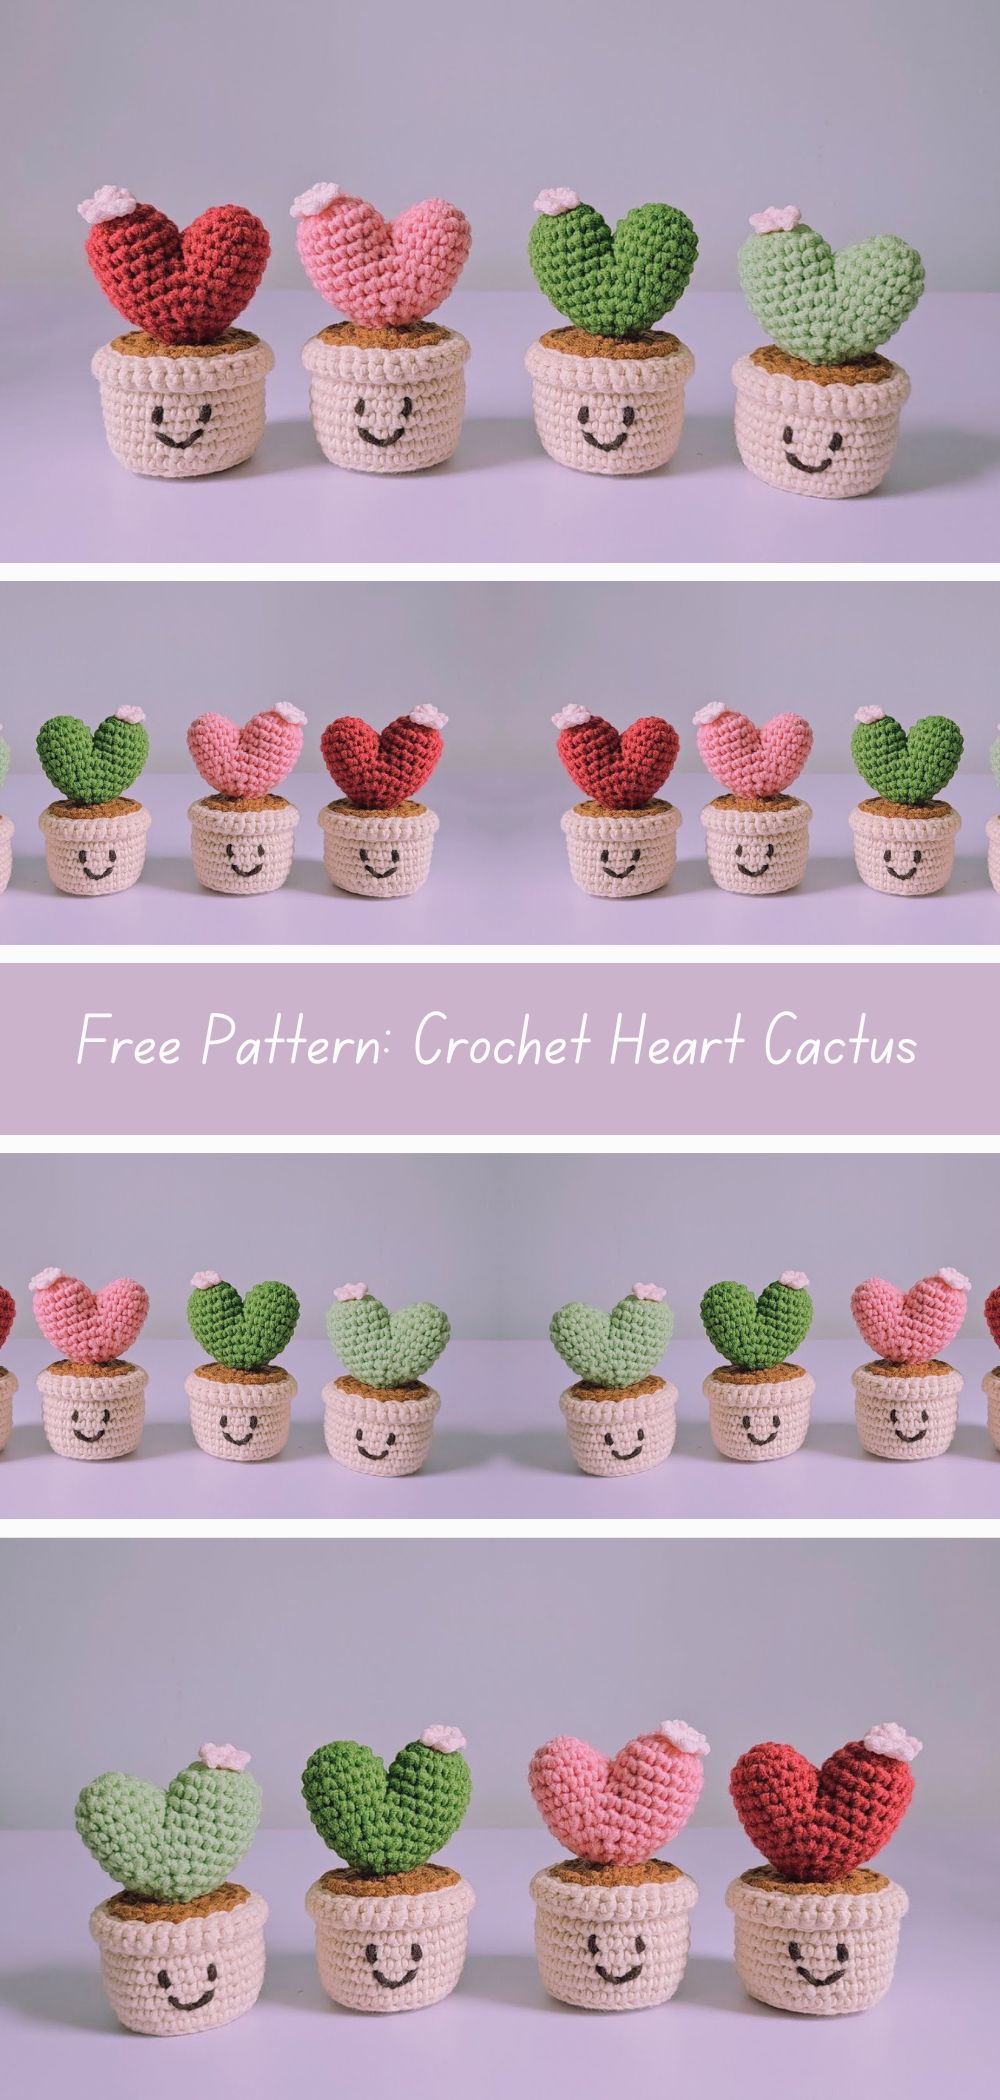 Free Pattern: Crochet Heart Cactus - Create a charming crochet heart cactus with this free pattern